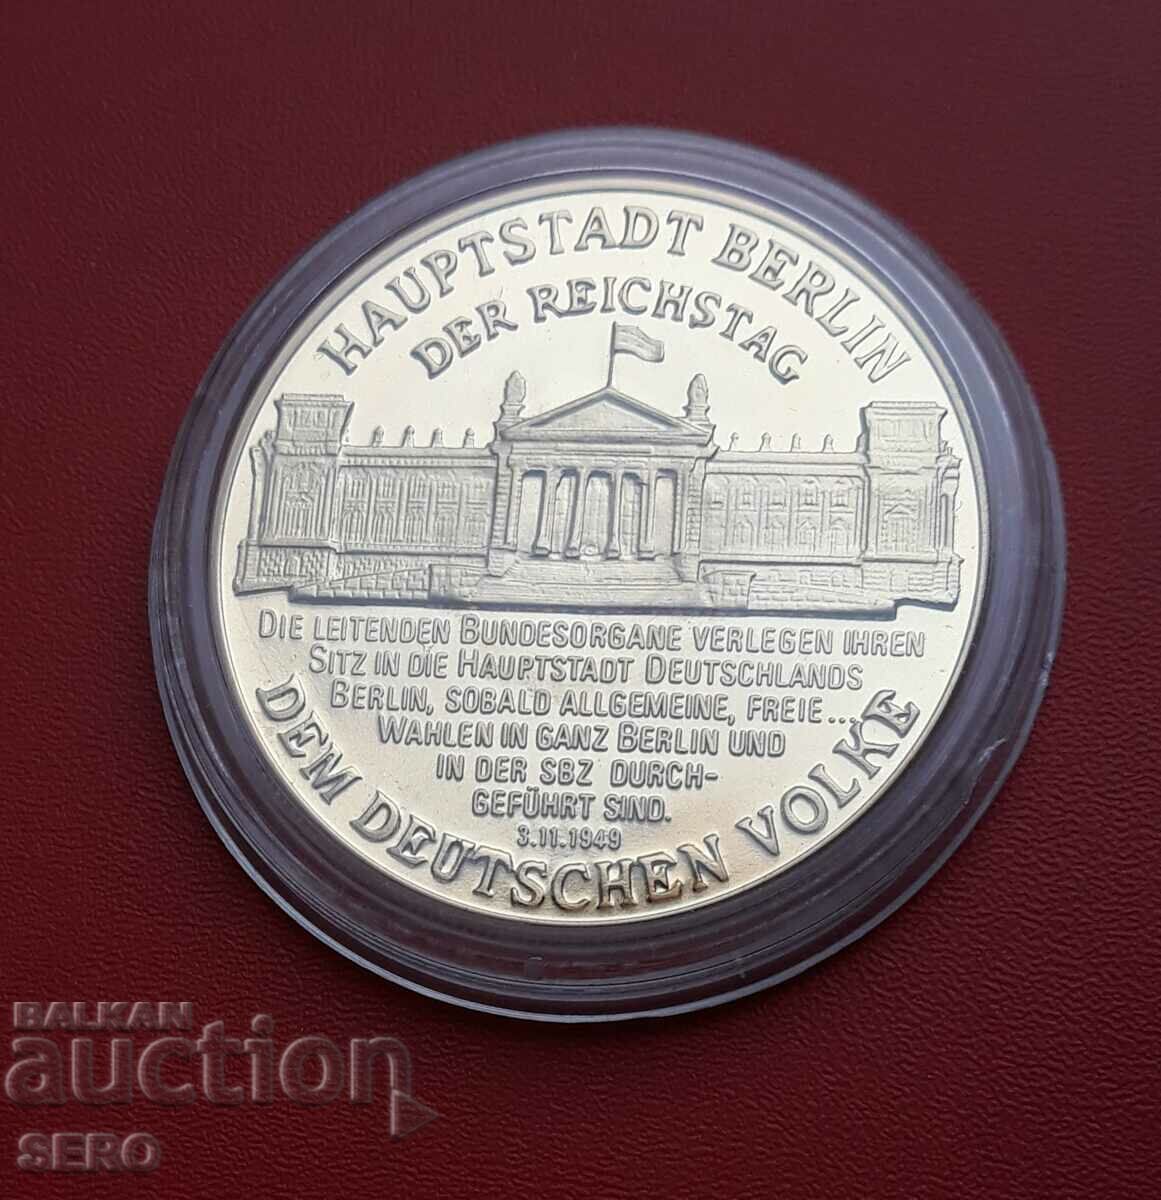 Germany-medal "United Germany"-Berlin-Reichstag